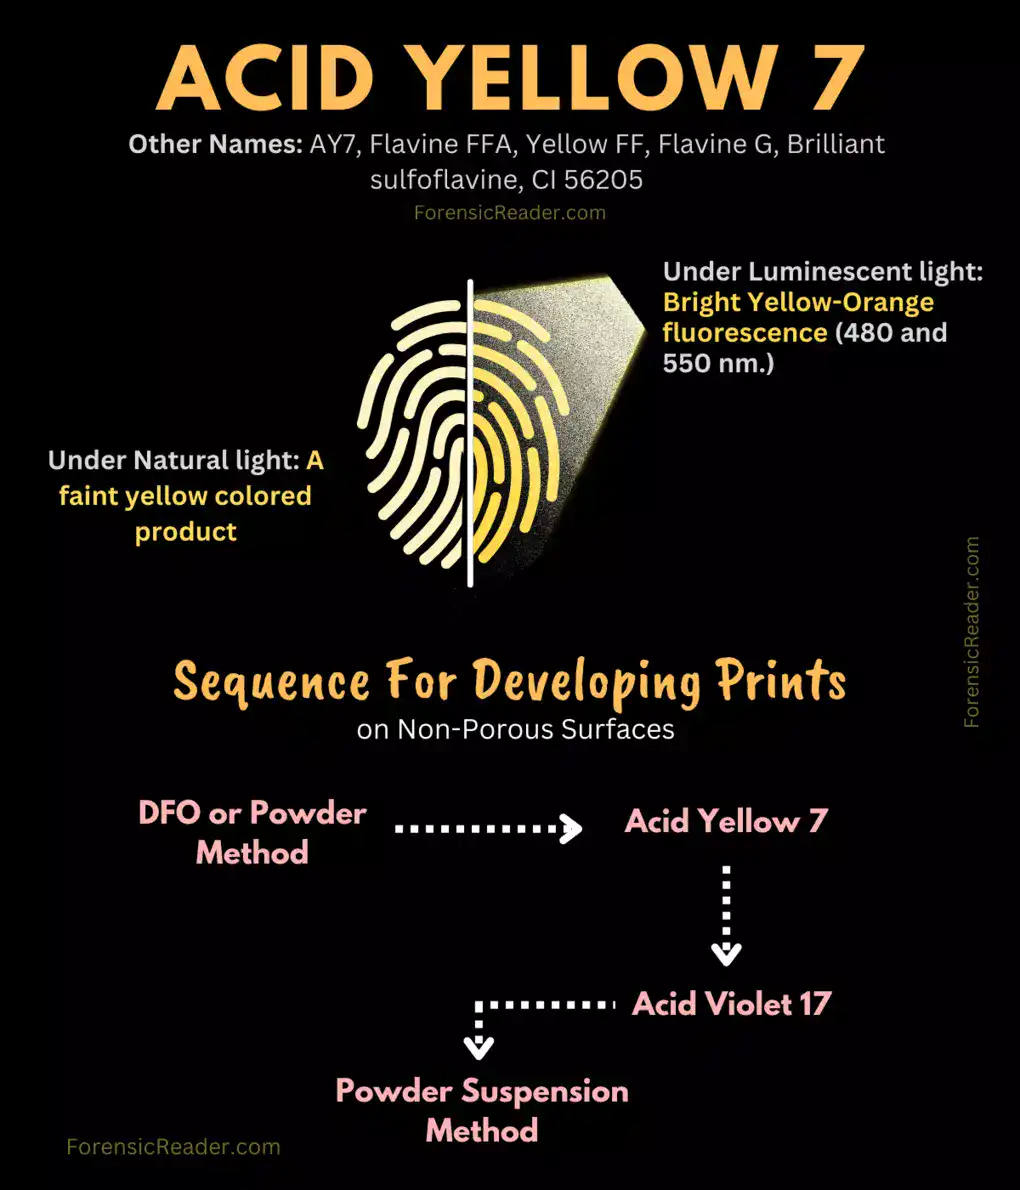 Principle and Working Reaction of Acid Yellow 7